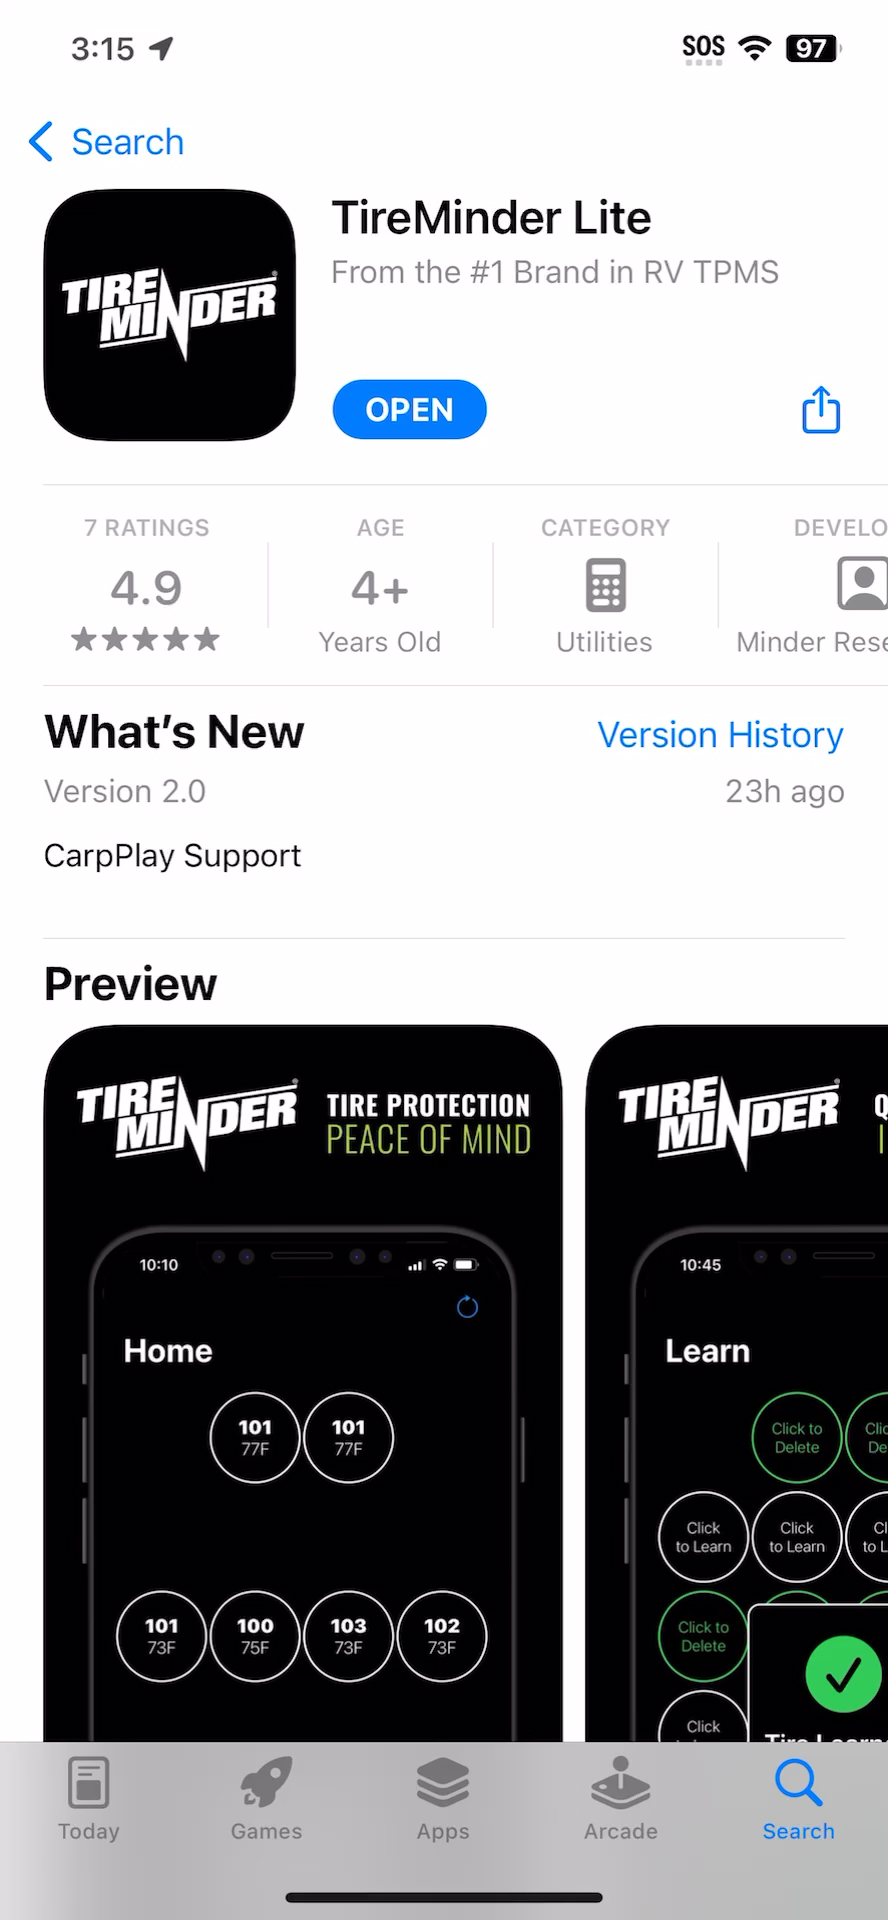 TireMinder on iOS App Store.jpg